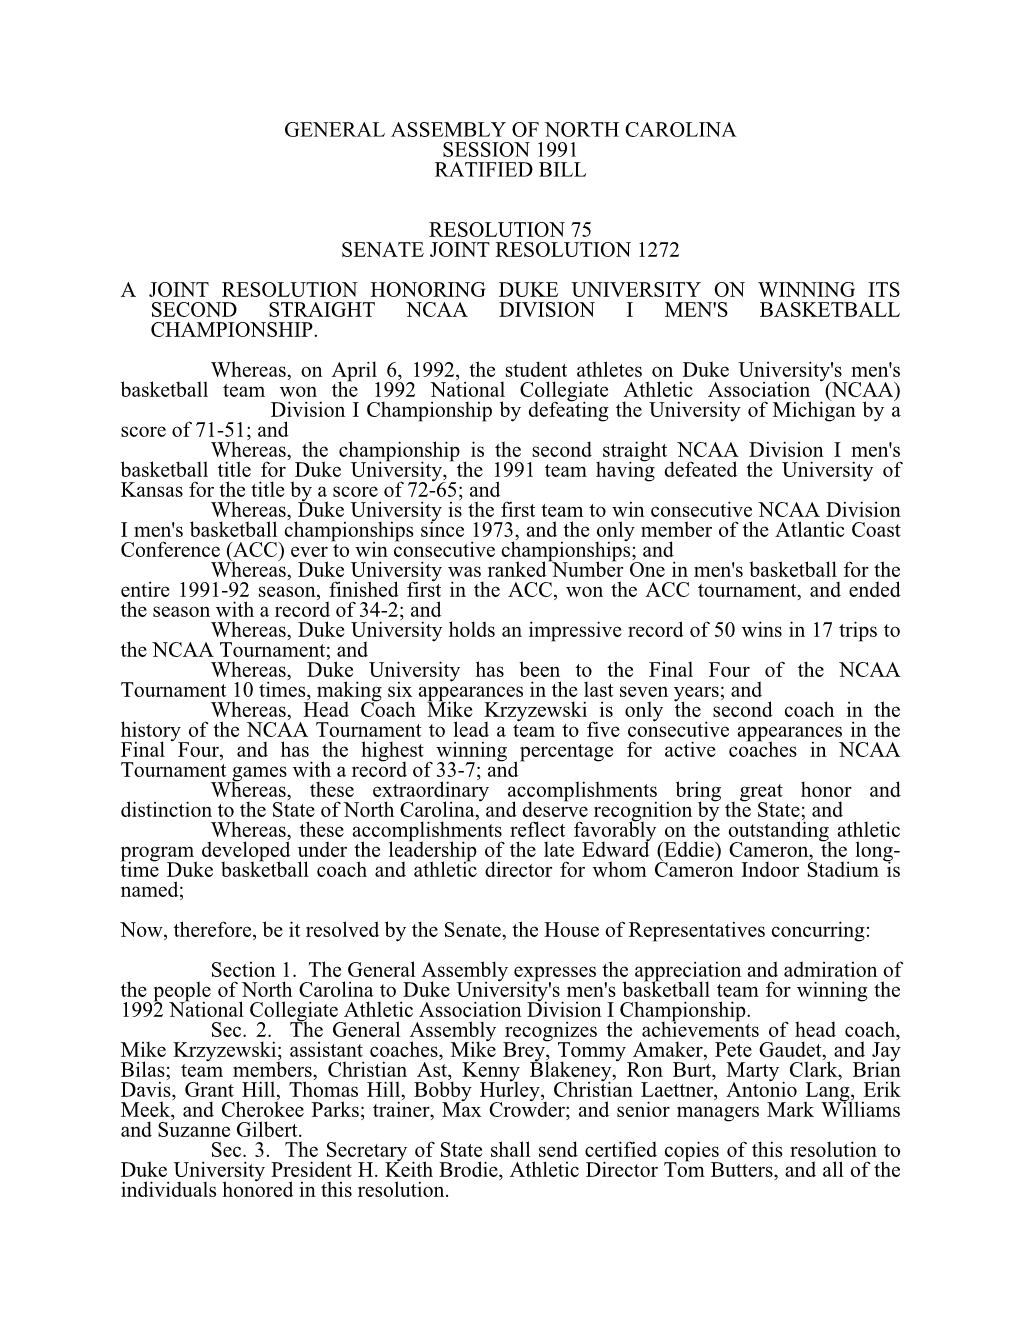 Senate Joint Resolution 1272